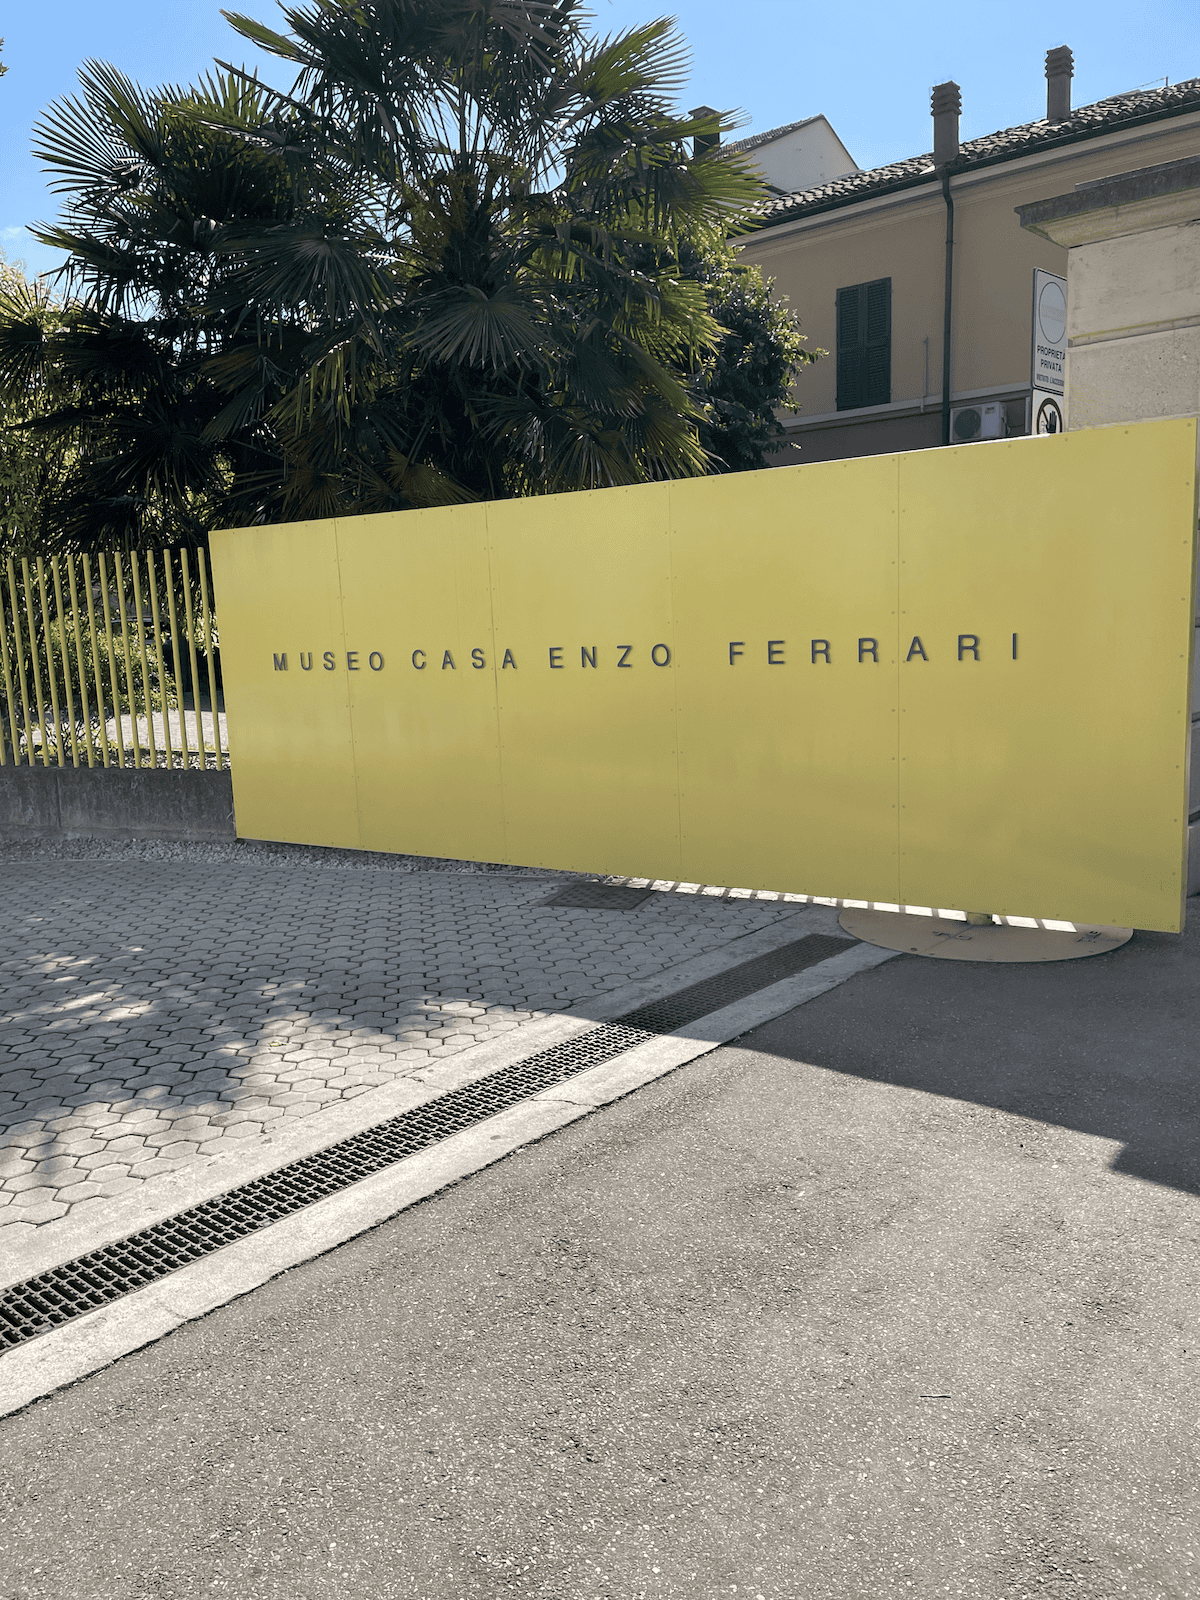 the gate to the museo casa enzo ferrari